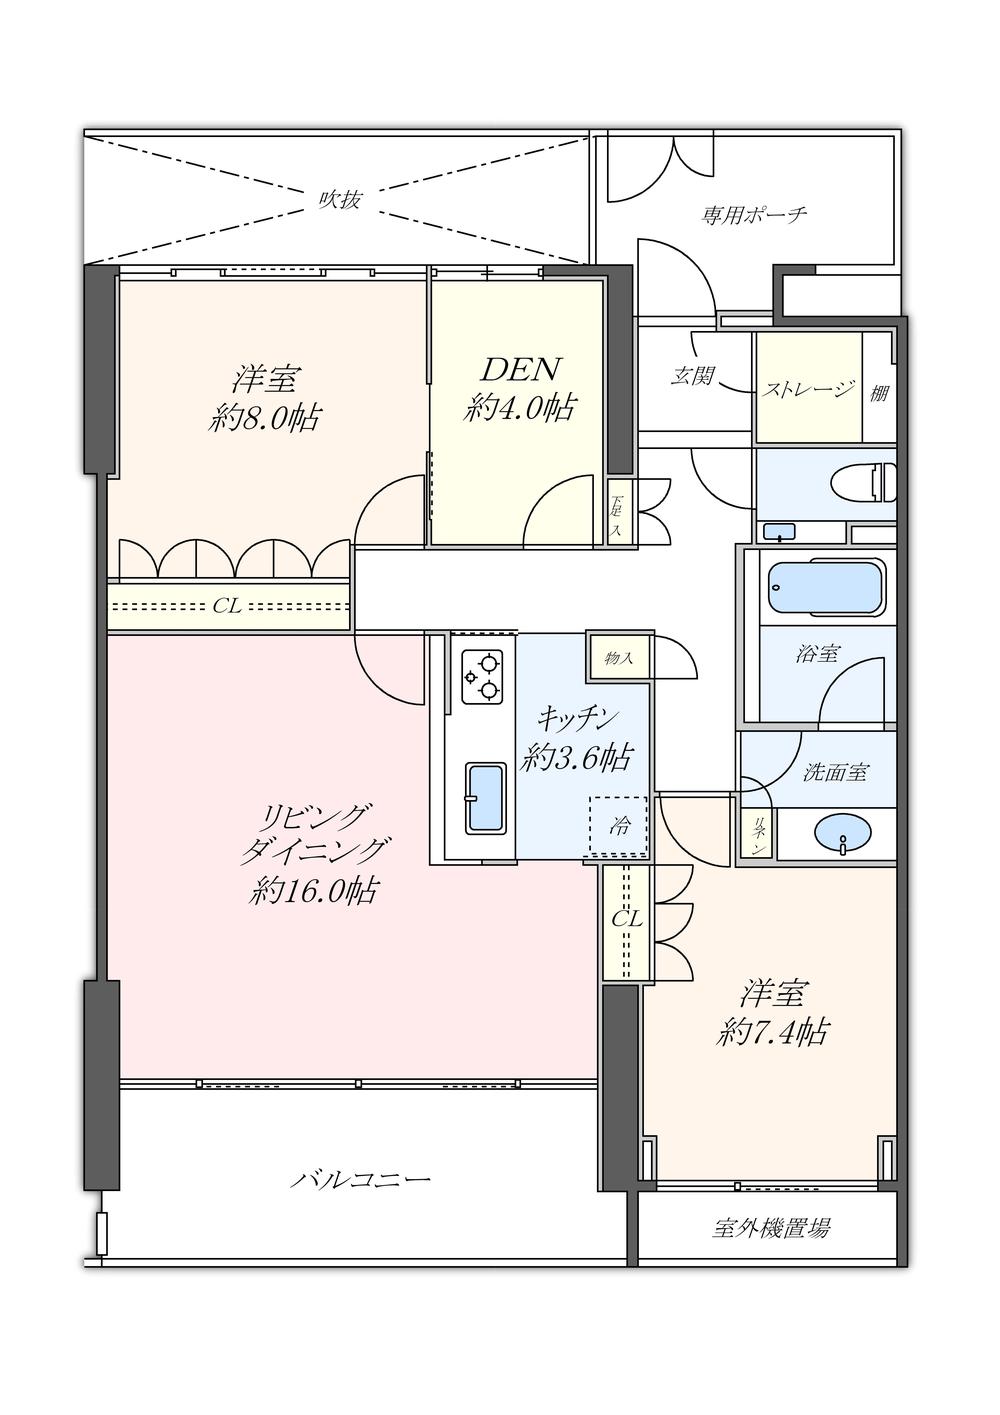 Floor plan. 2LDK + S (storeroom), Price 69,800,000 yen, Occupied area 88.41 sq m , Balcony area 11.05 sq m